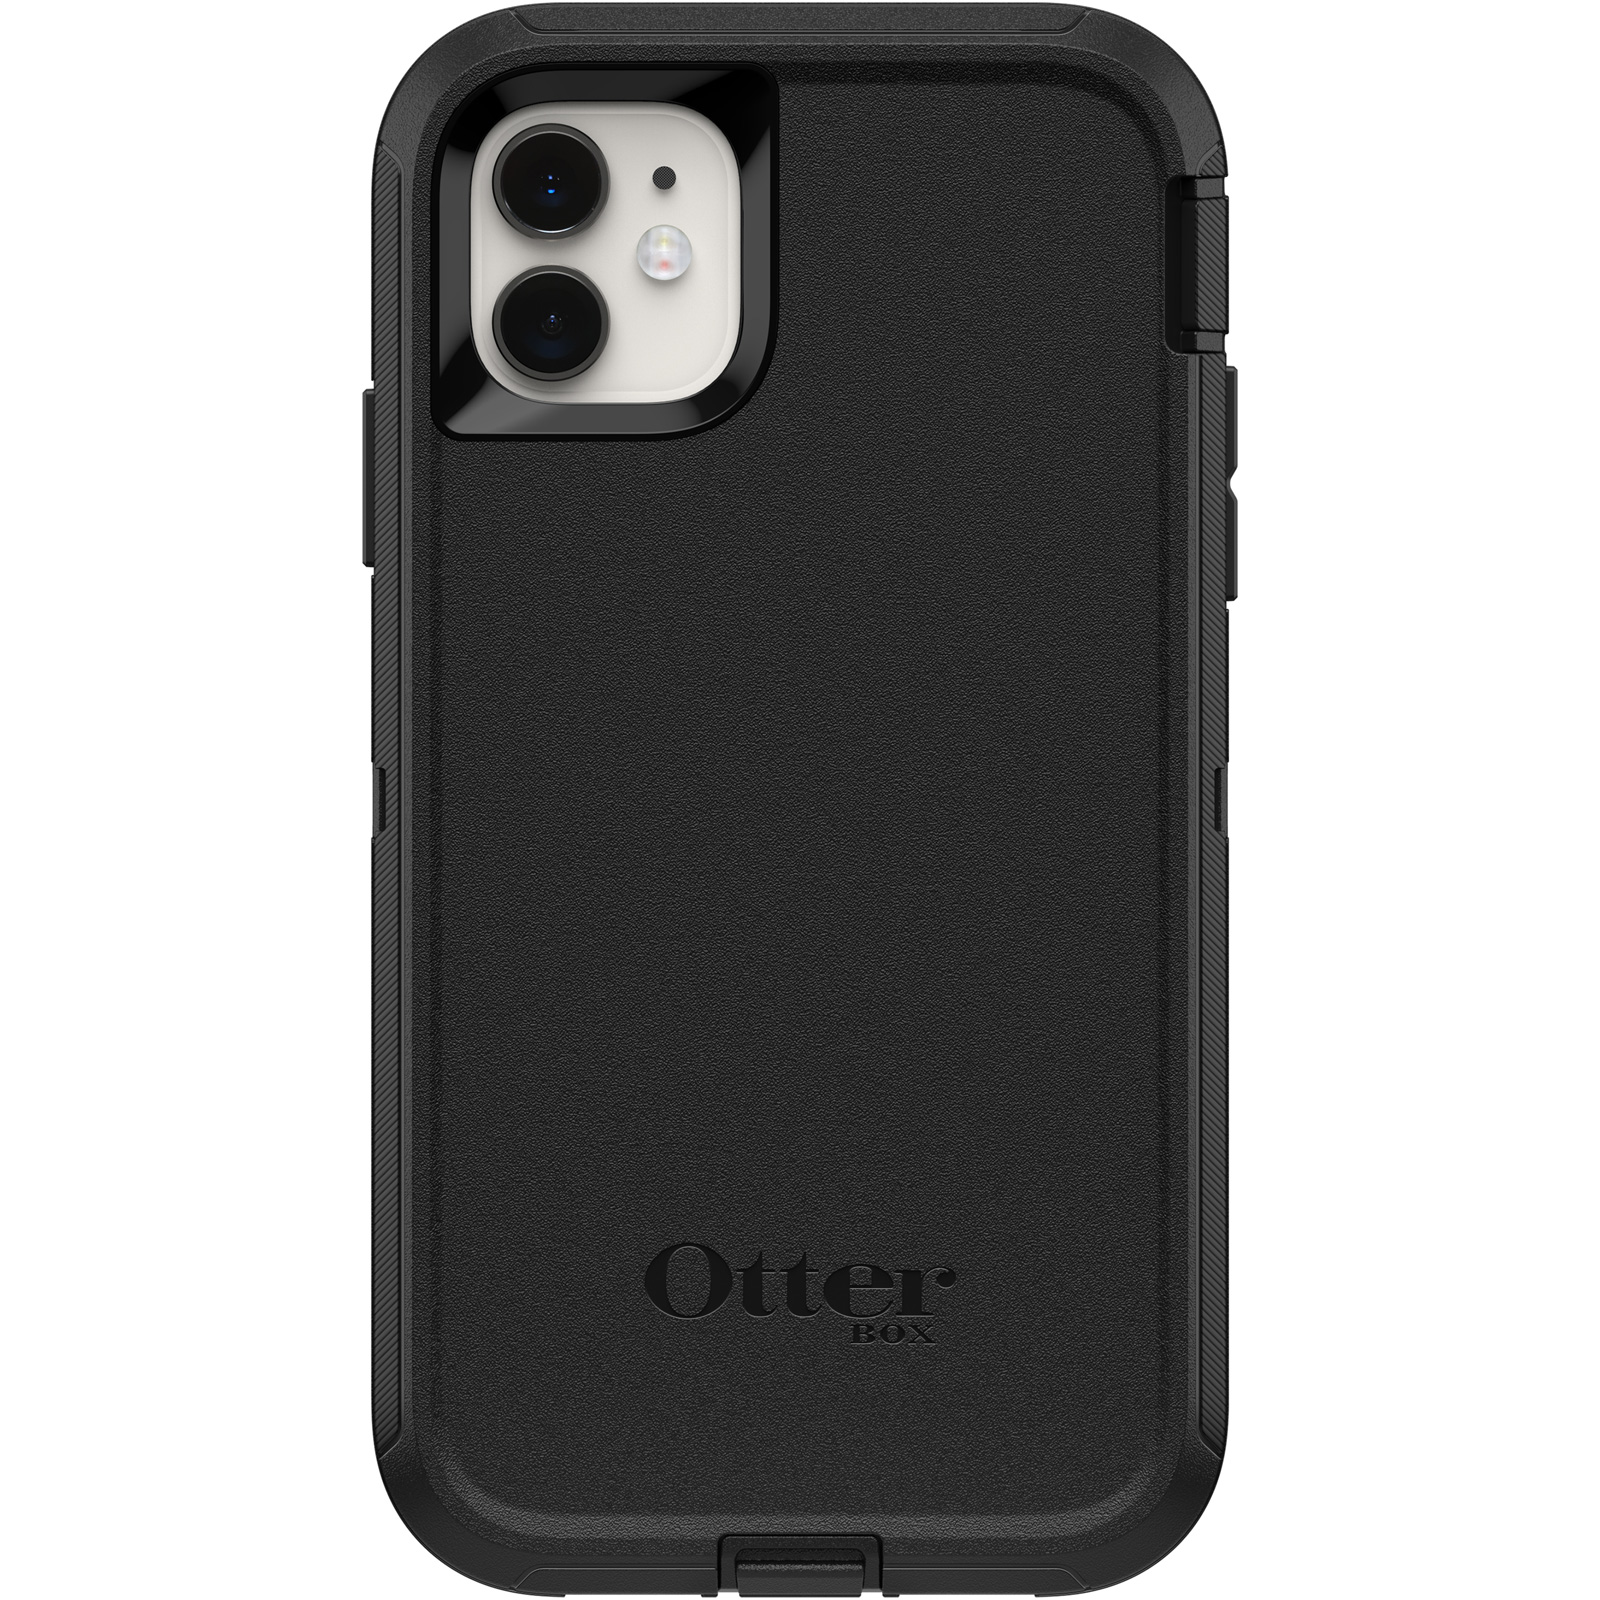 Otterbox Defender Case For iPhone 11 Black